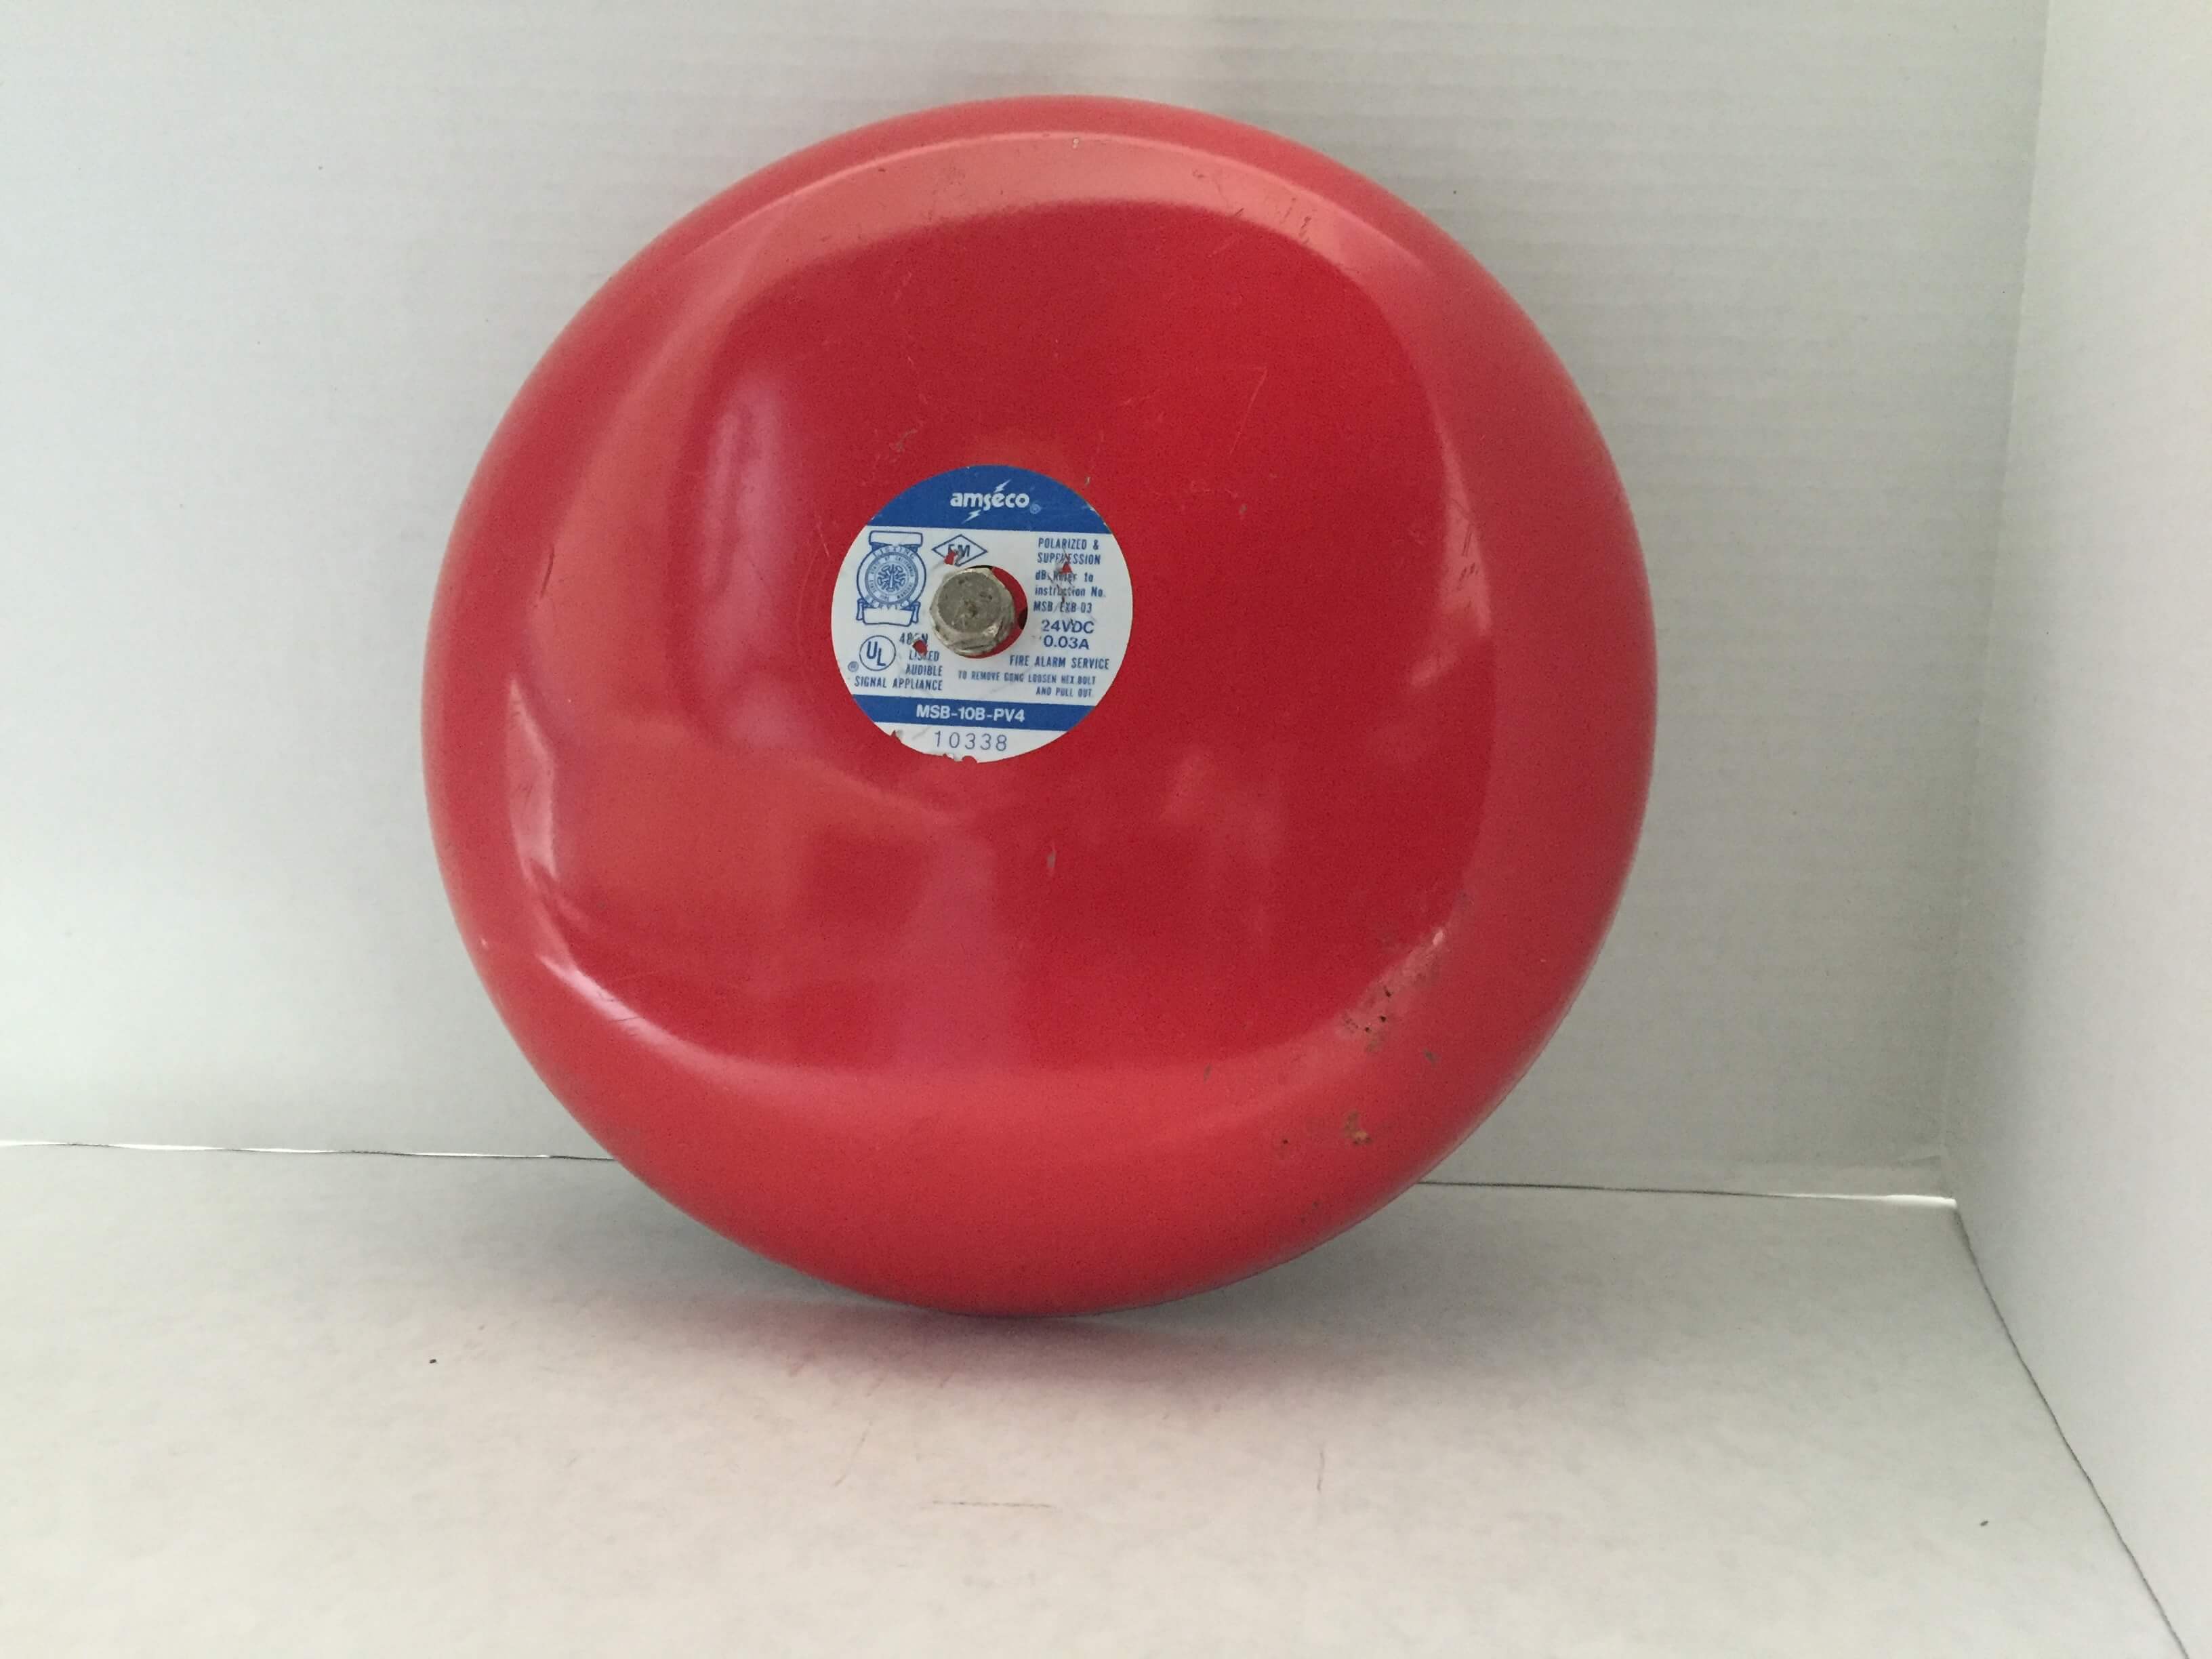 Amseco Fire Alarm Gong MSB-6B-P2 